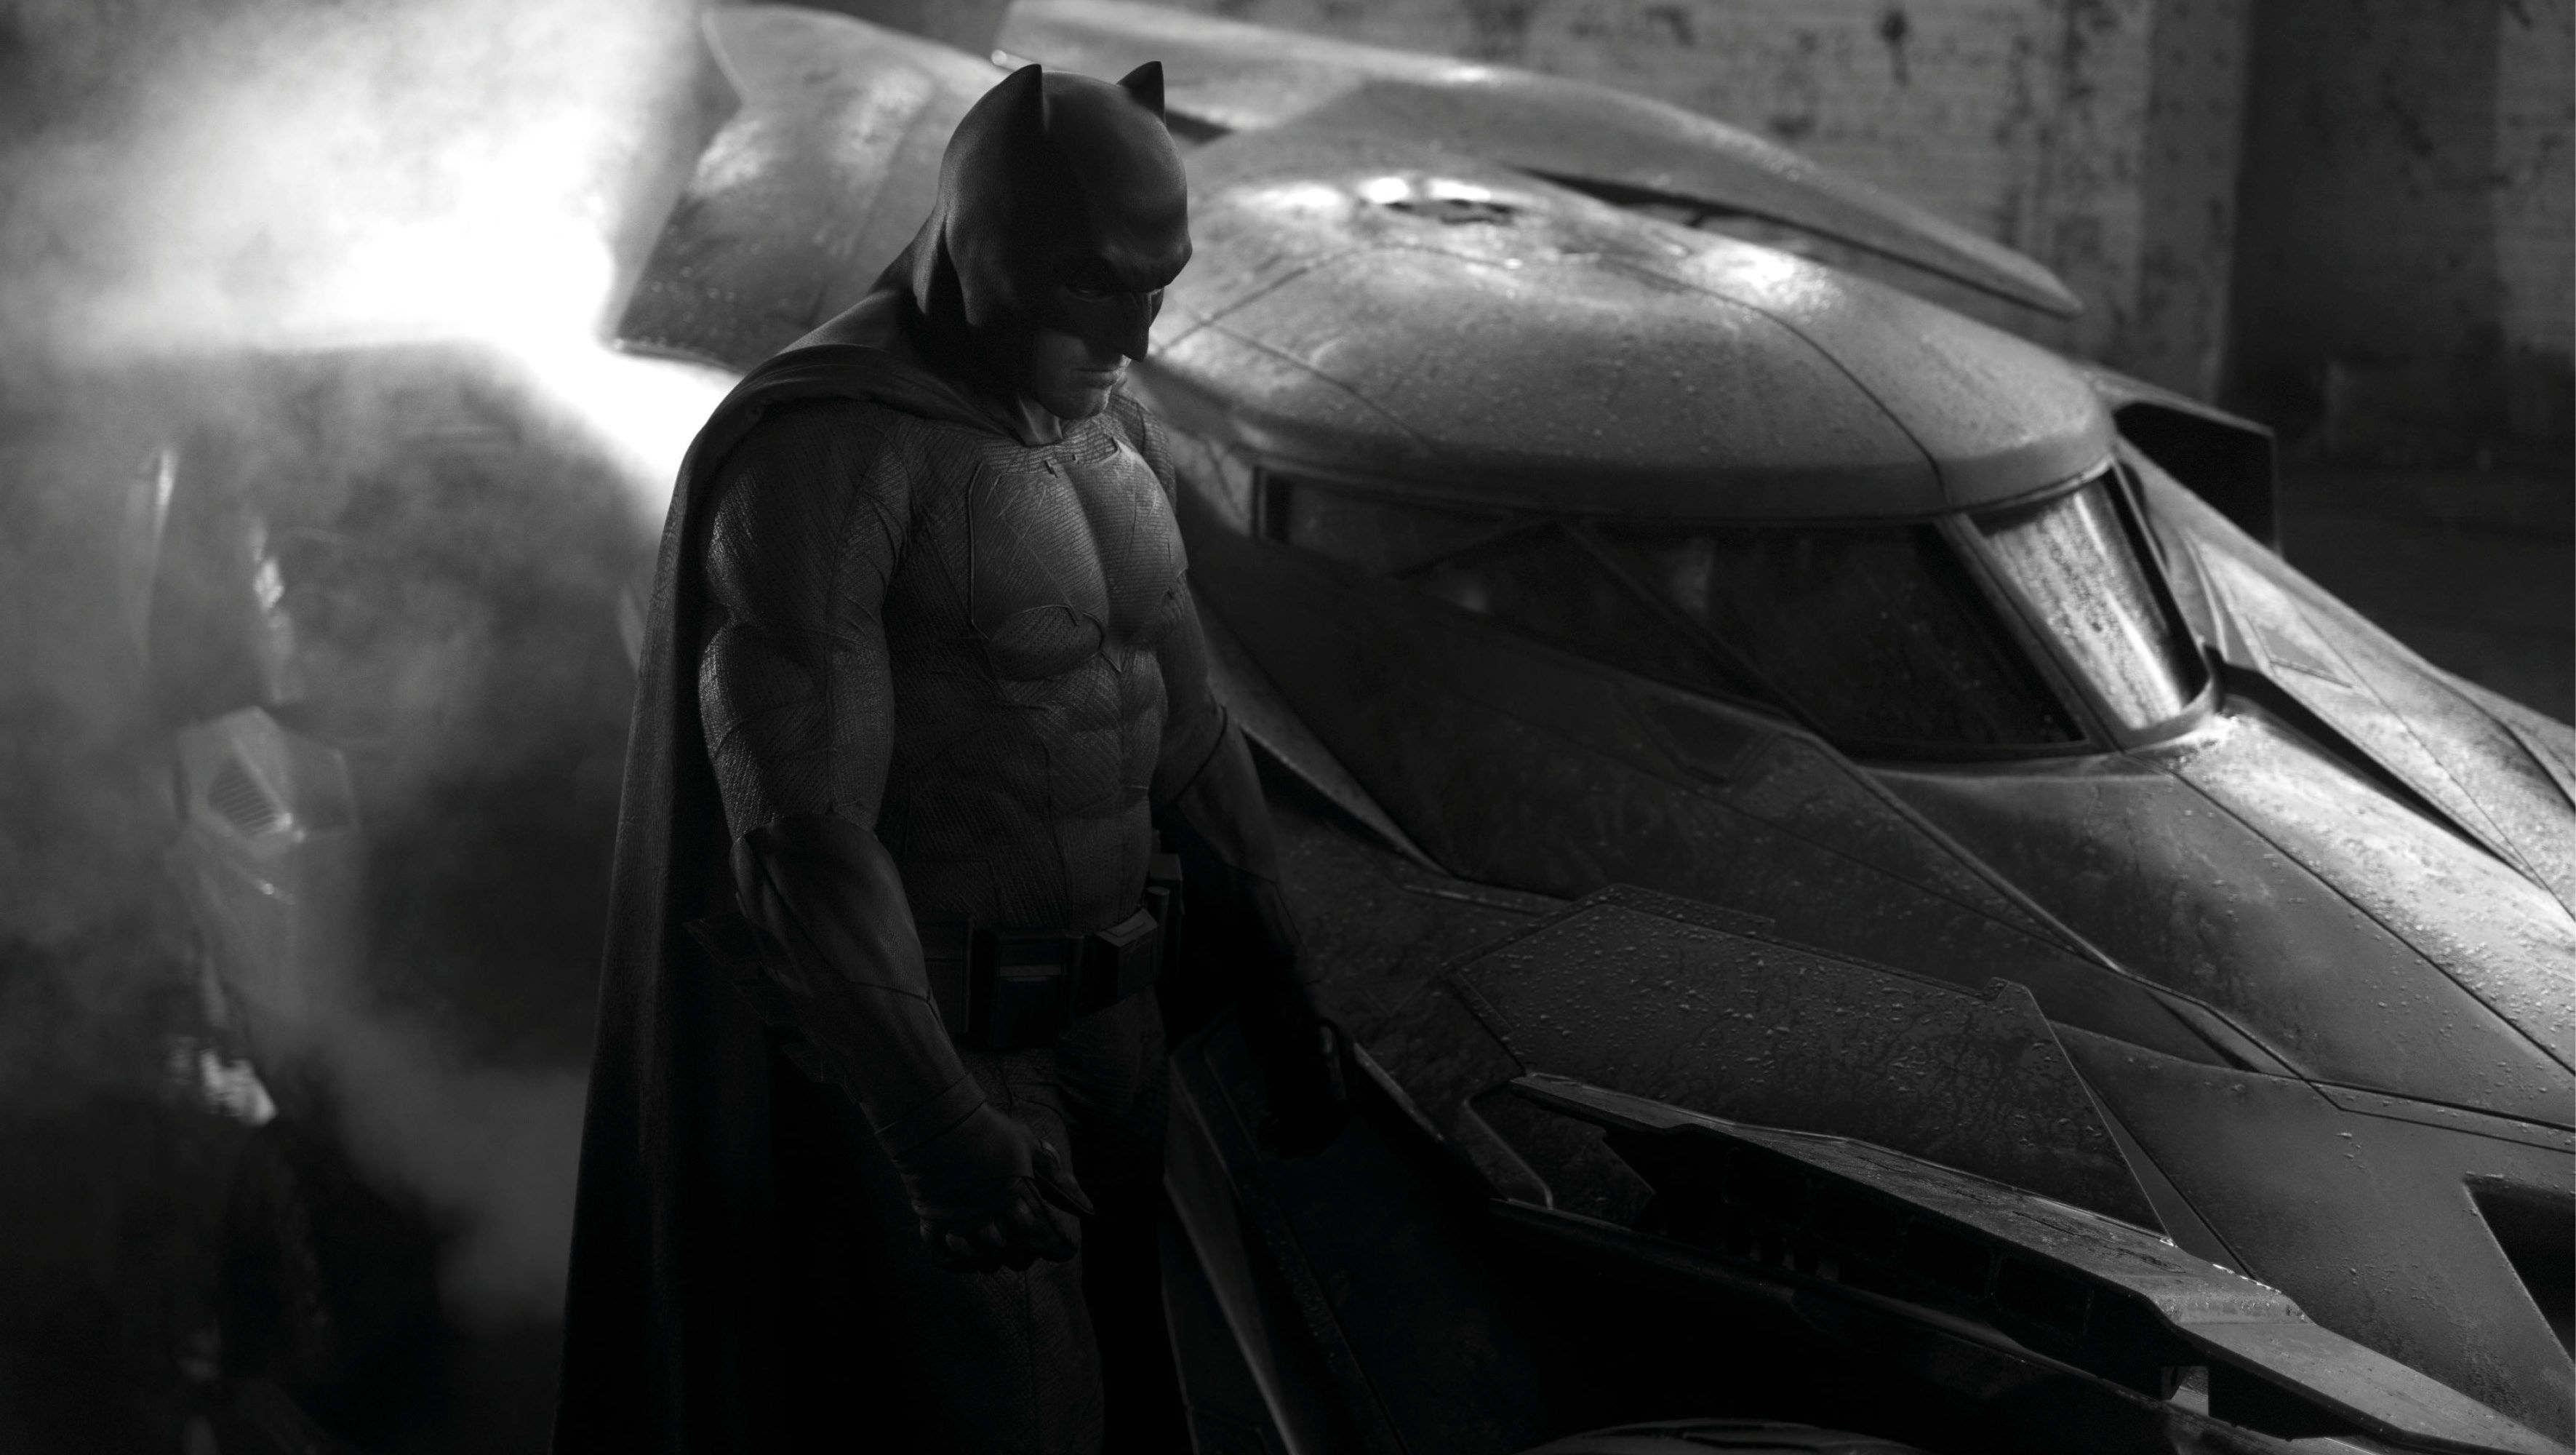 Ben Affleck Gave Up Batman After Failing to 'Crack' New Film